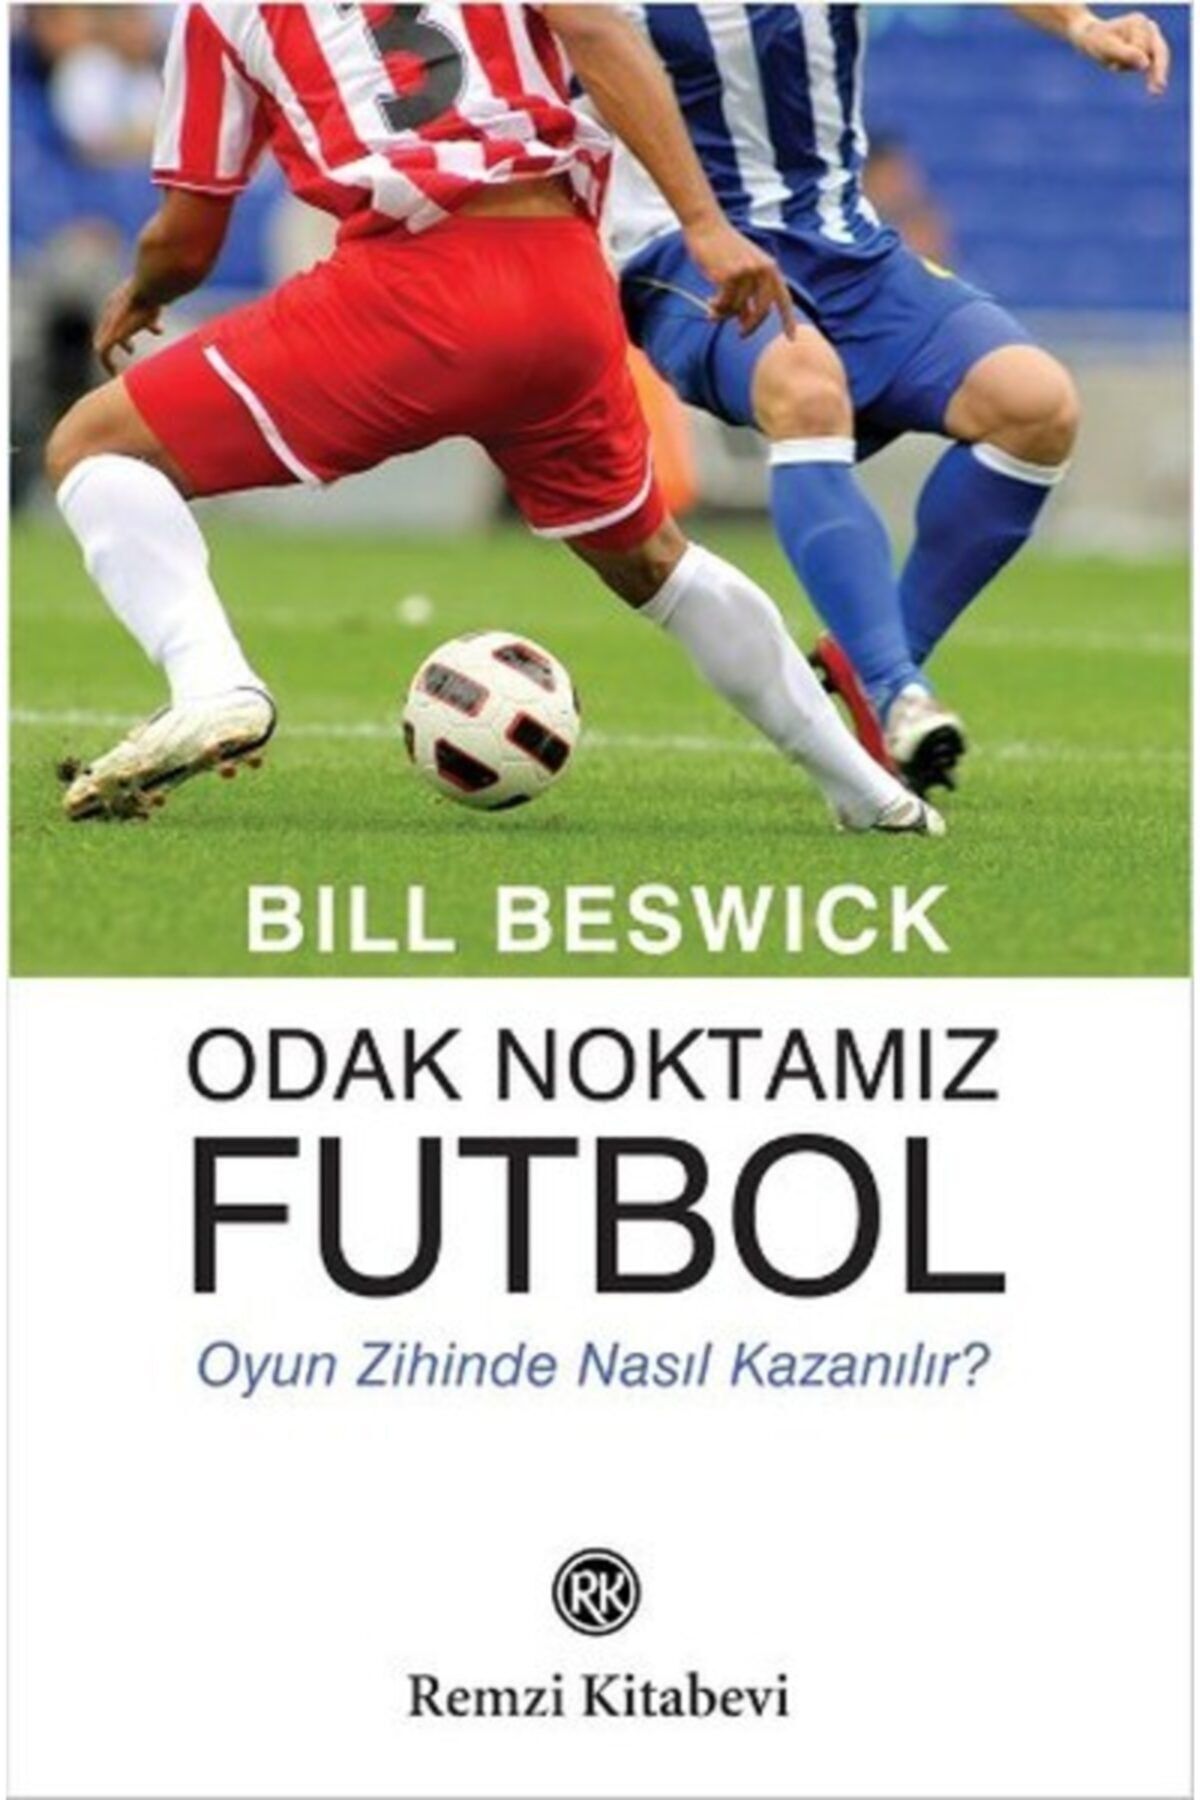 Remzi Kitabevi Odak Noktamız Futbol kitabı - Bill Beswick - Remzi Kitabevi